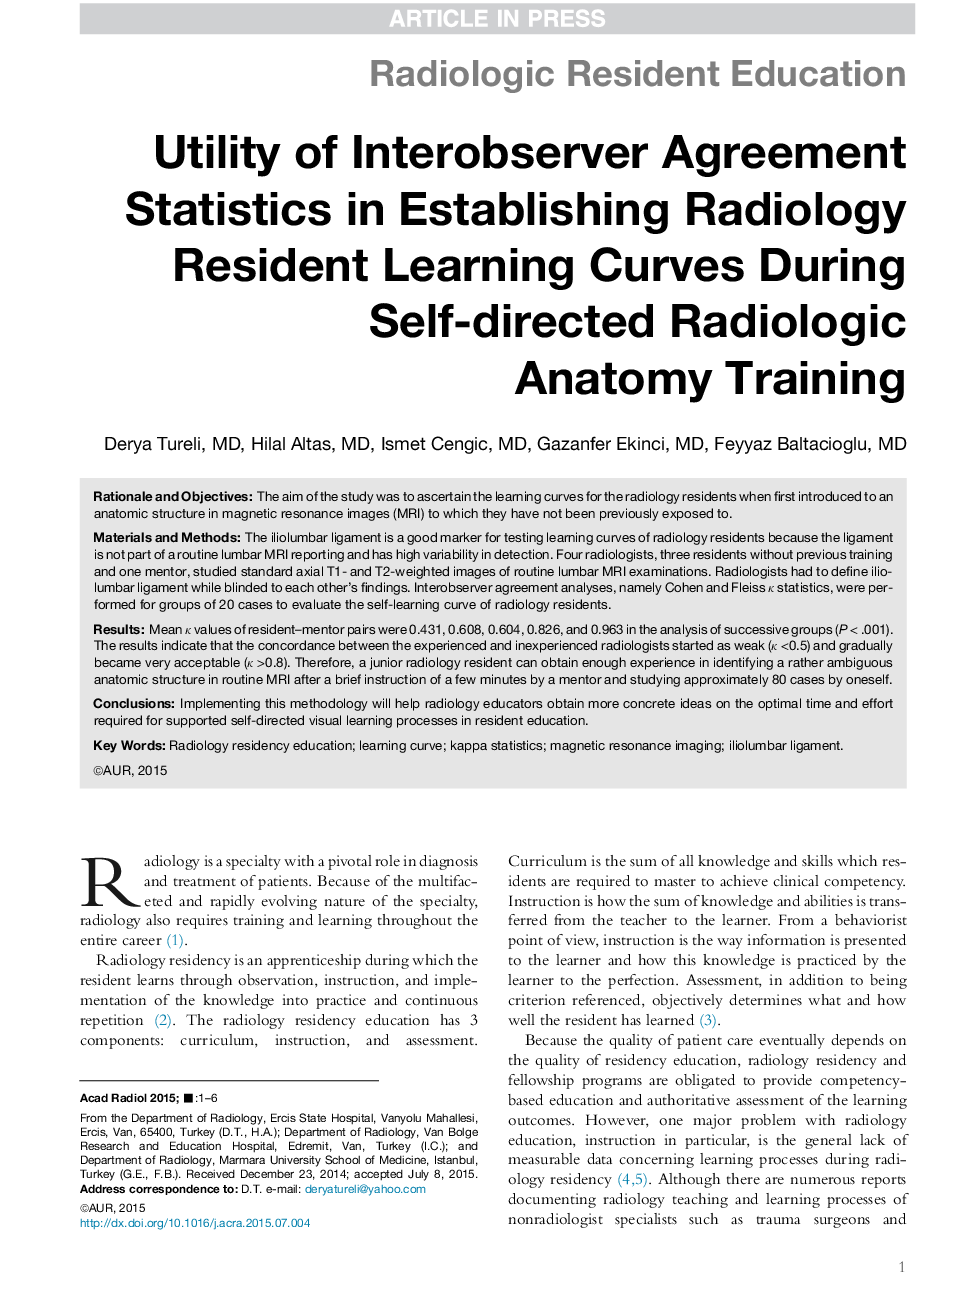 Utility of Interobserver Agreement Statistics in Establishing Radiology Resident Learning Curves During Self-directed Radiologic Anatomy Training